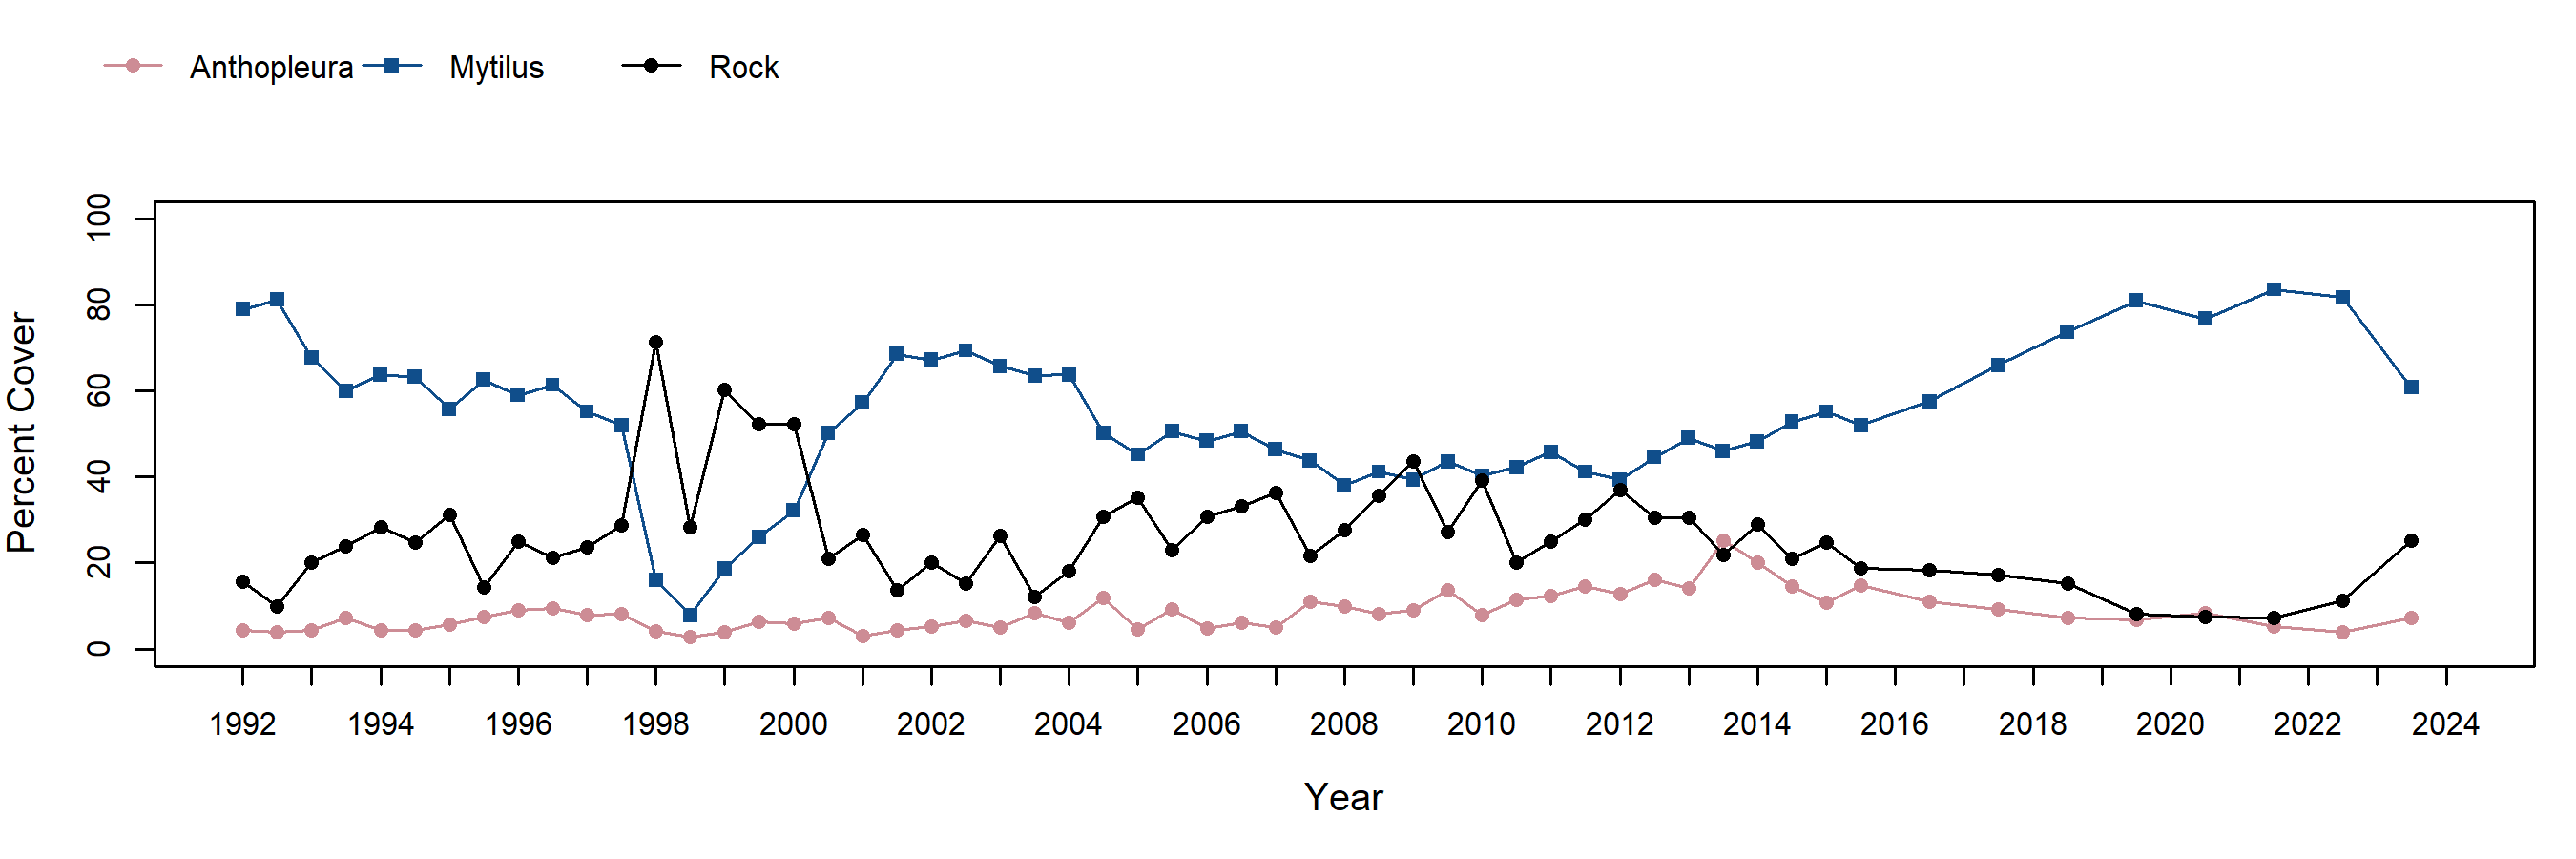 Arroyo Hondo Mytilus trend plot